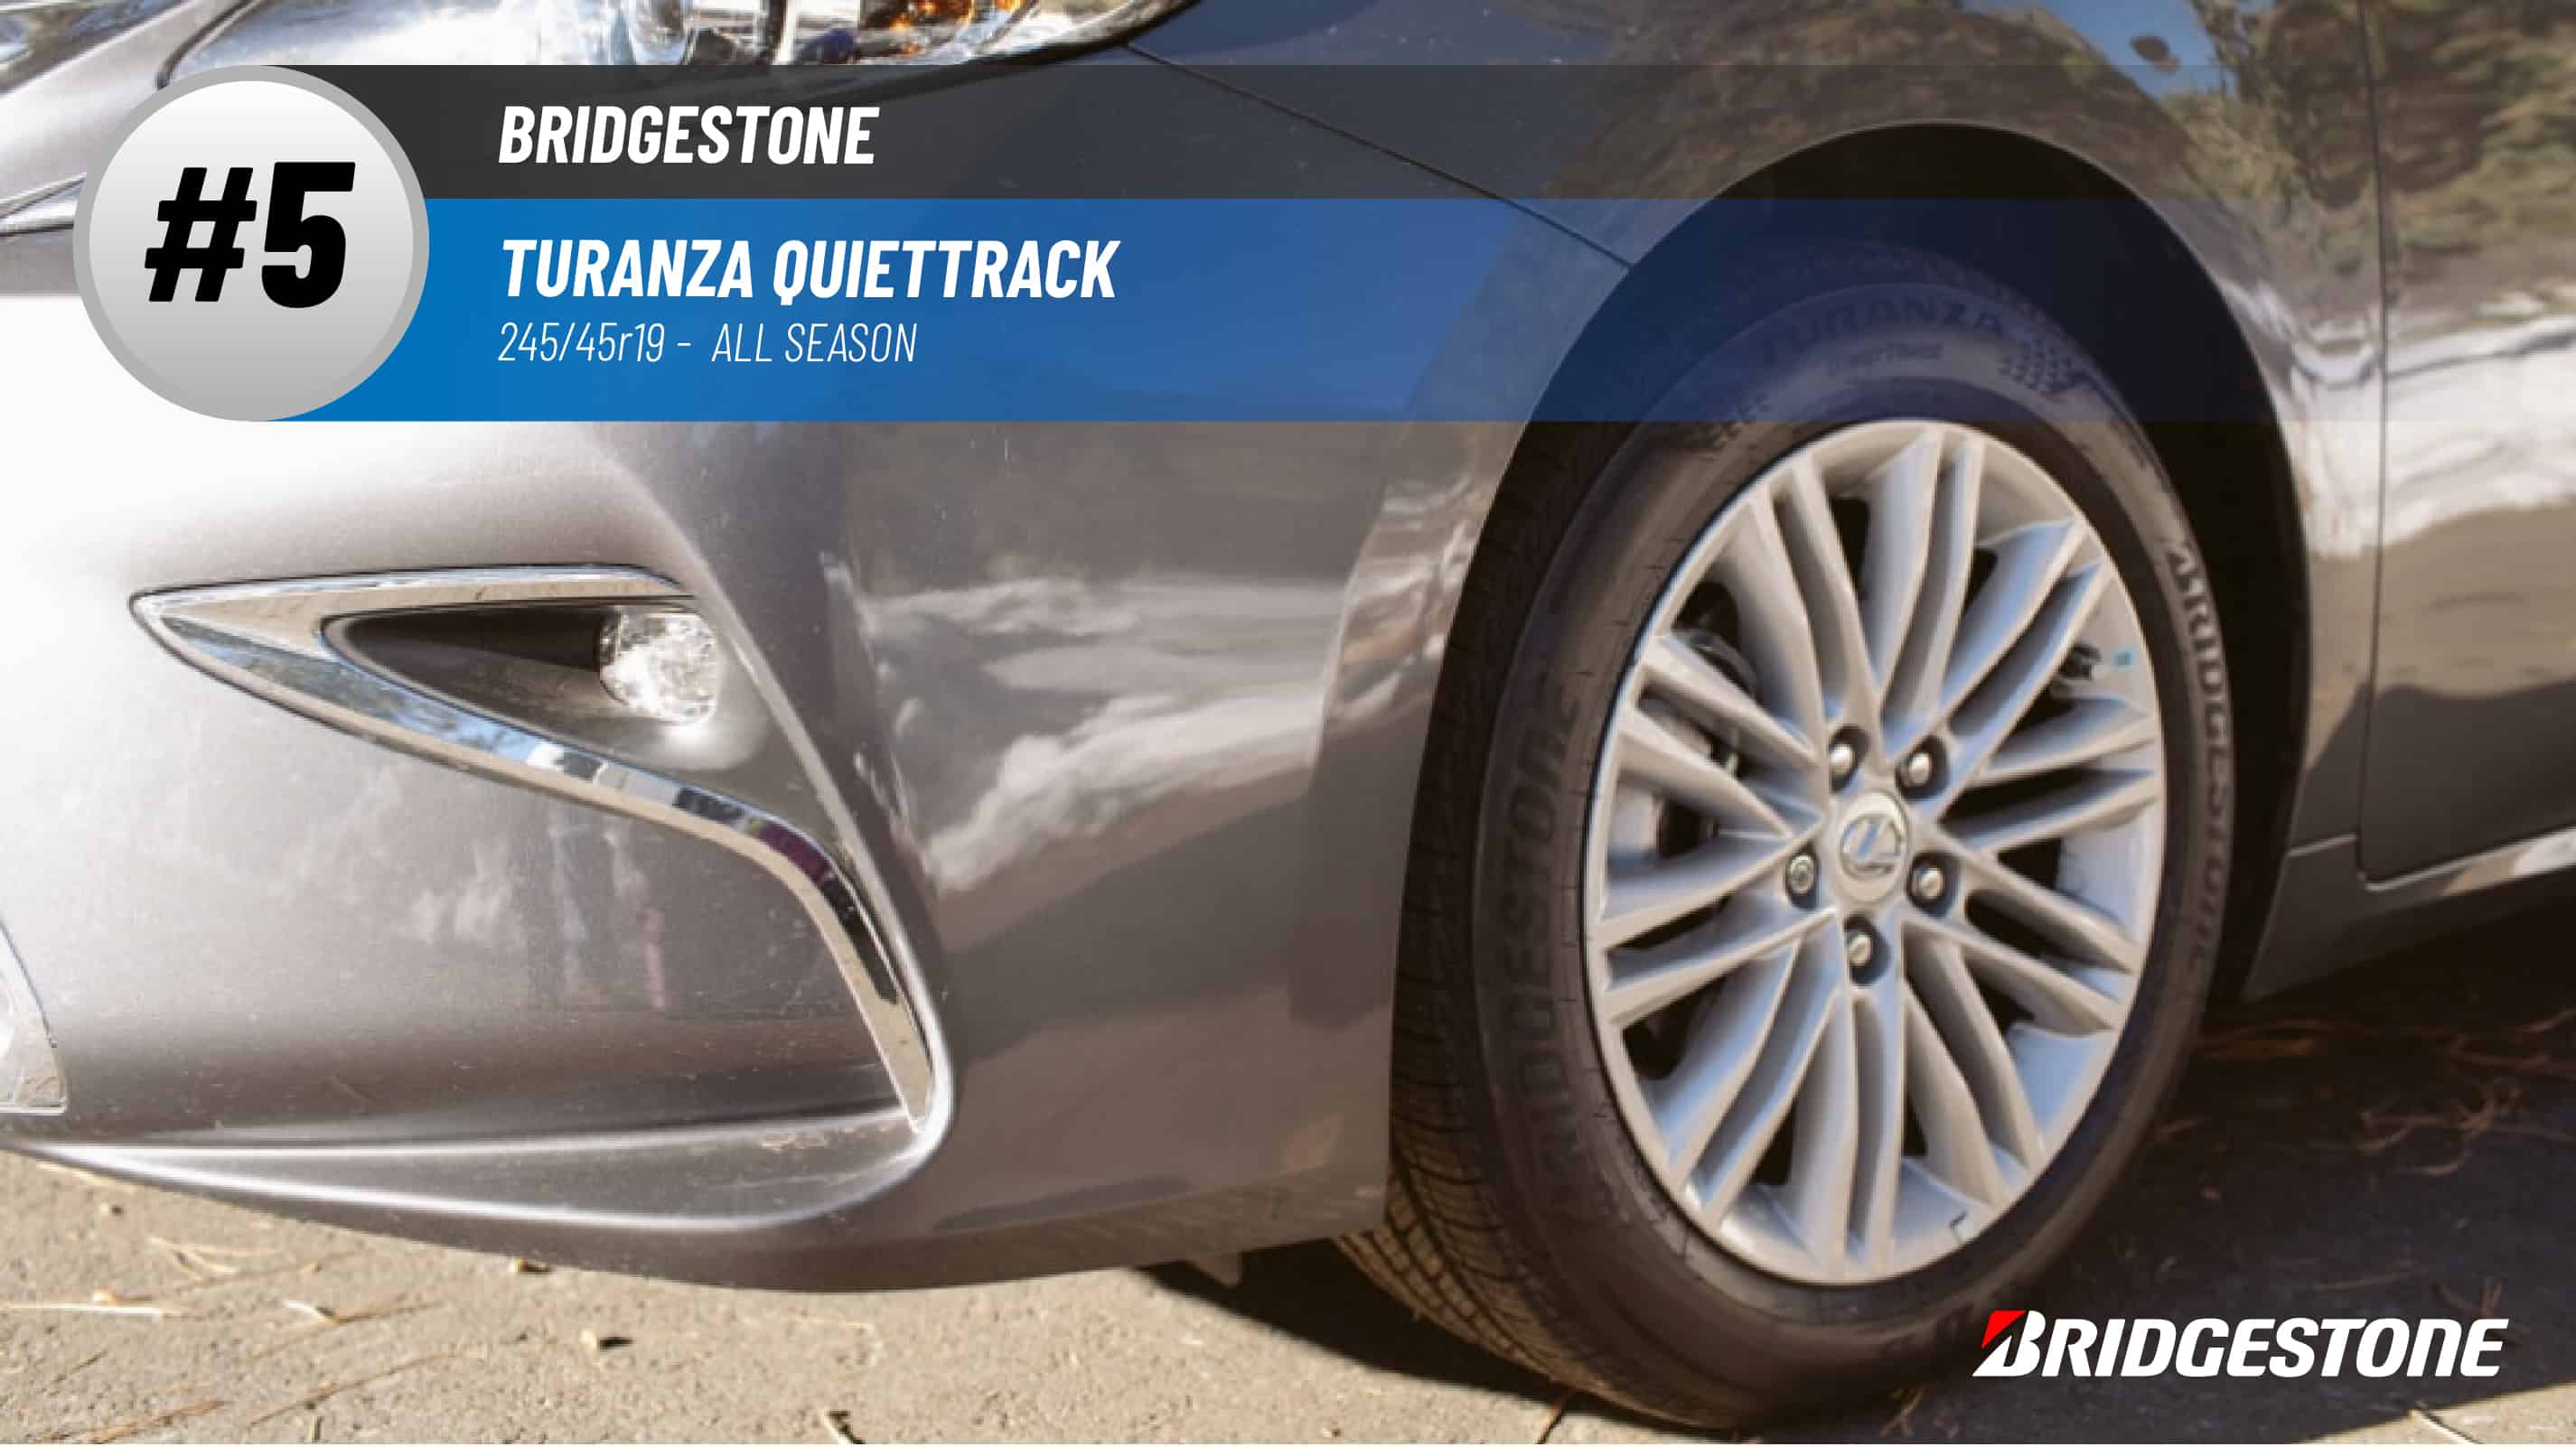 Top #5 All Season Tires: Bridgestone Turanza Quiettrack – 245/45r19